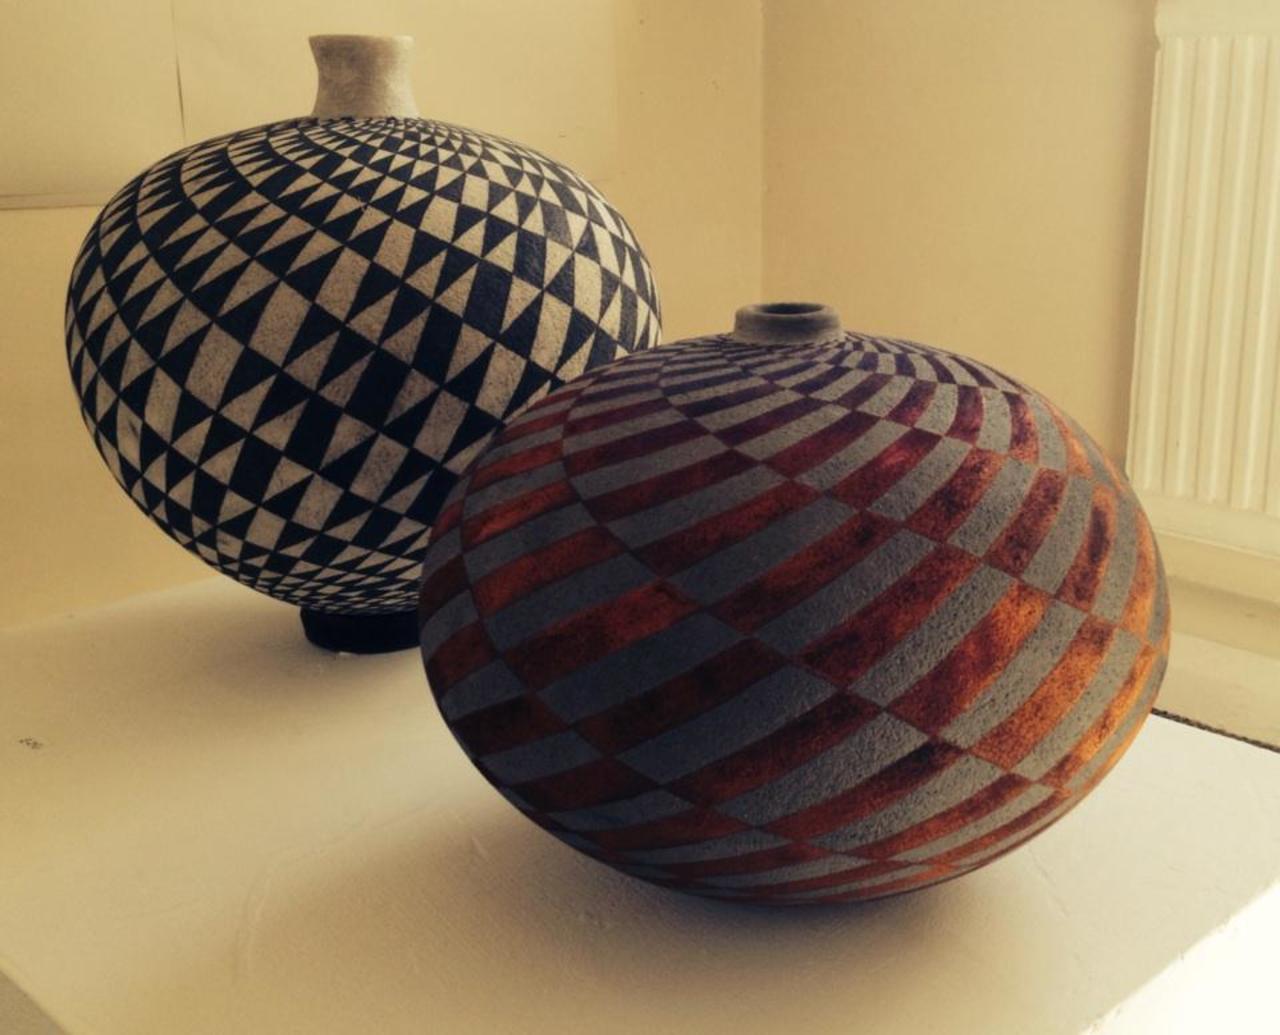 #ceramics by #IlonaSulikova #YorkOpenStudios, today til 5pm & all next wkend. http://t.co/js2Bnfzixi